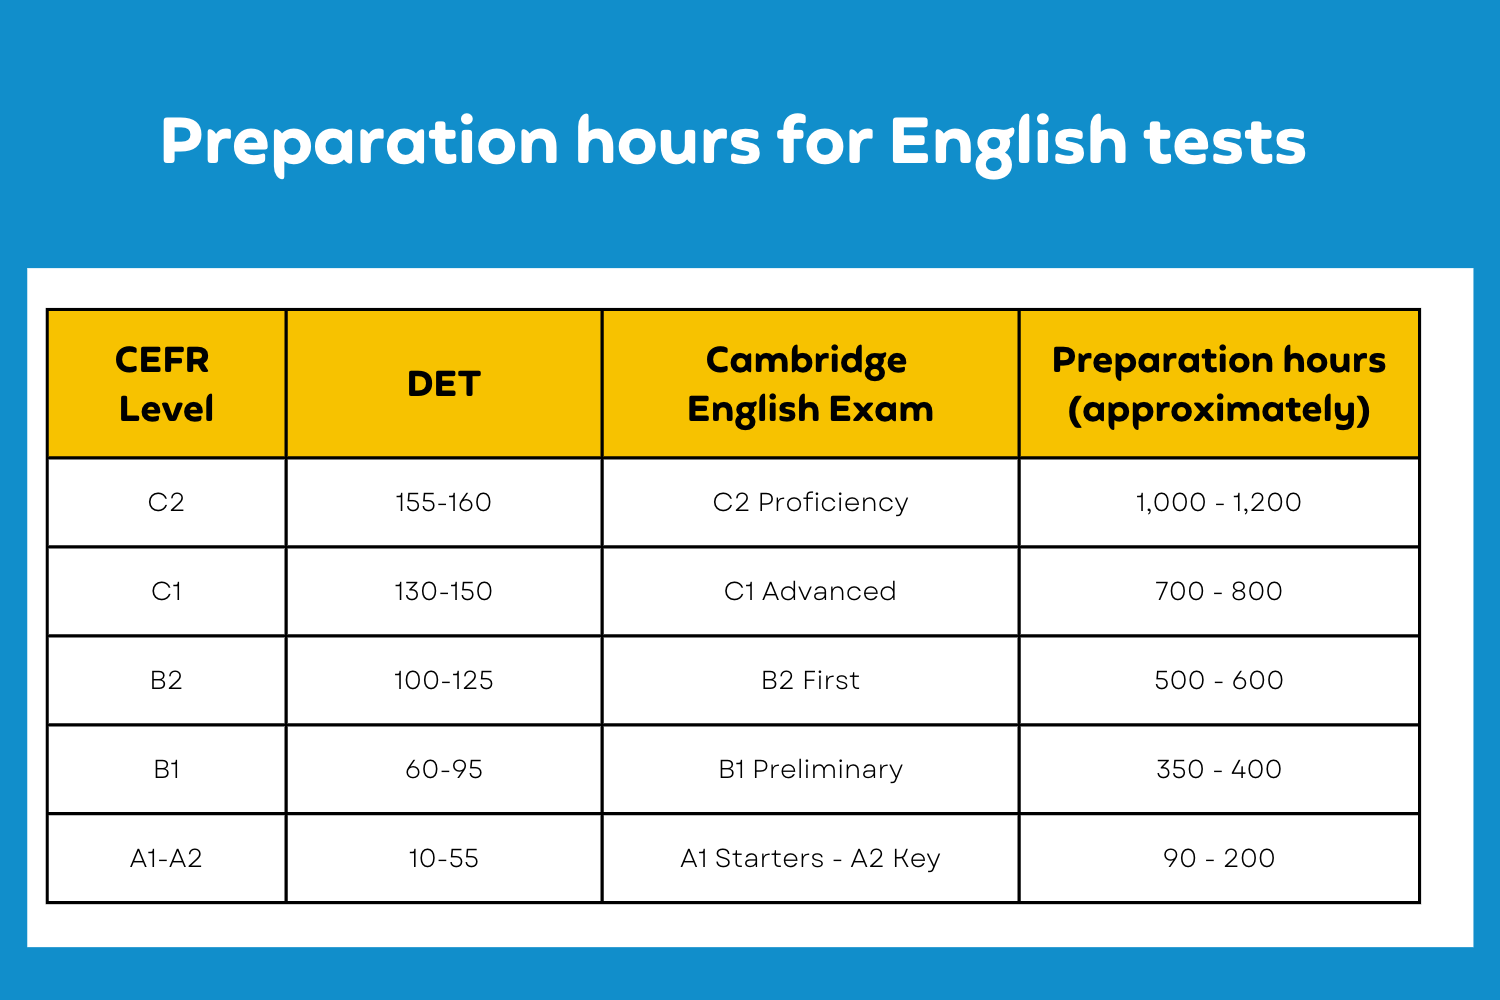 English Preparation hours, duolingo practice test, duolingo preparation courses, duolingo English test, DET Practice platform, CEFR levels